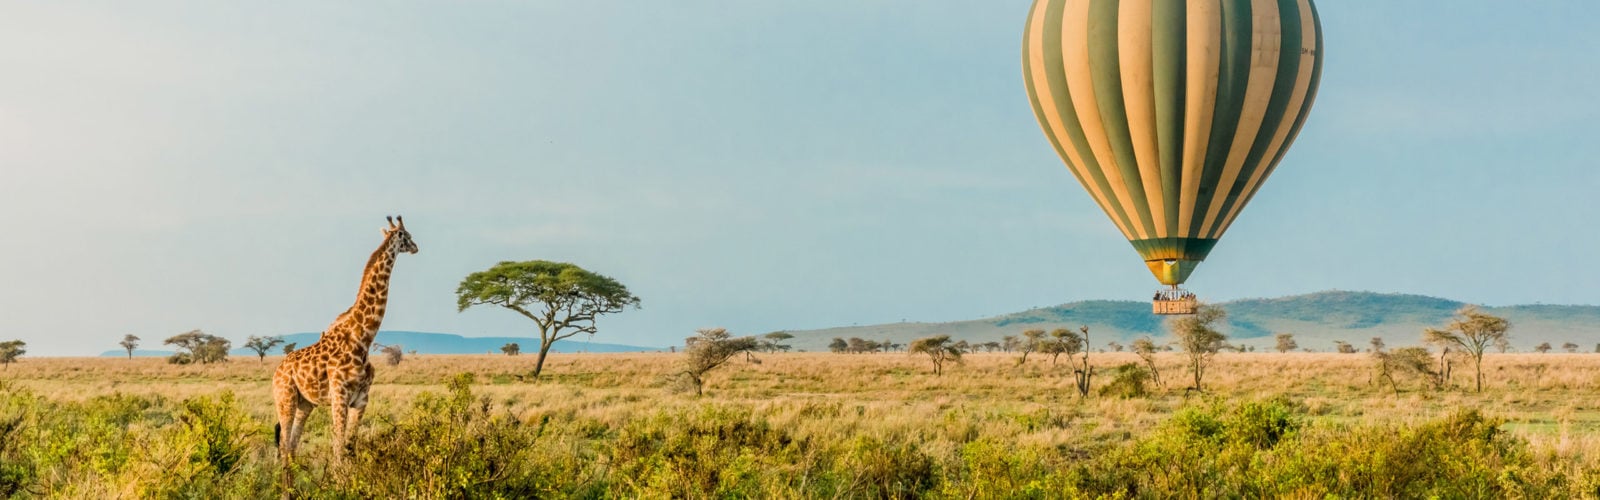 Giraffe watching a hot air balloon, Tanzania